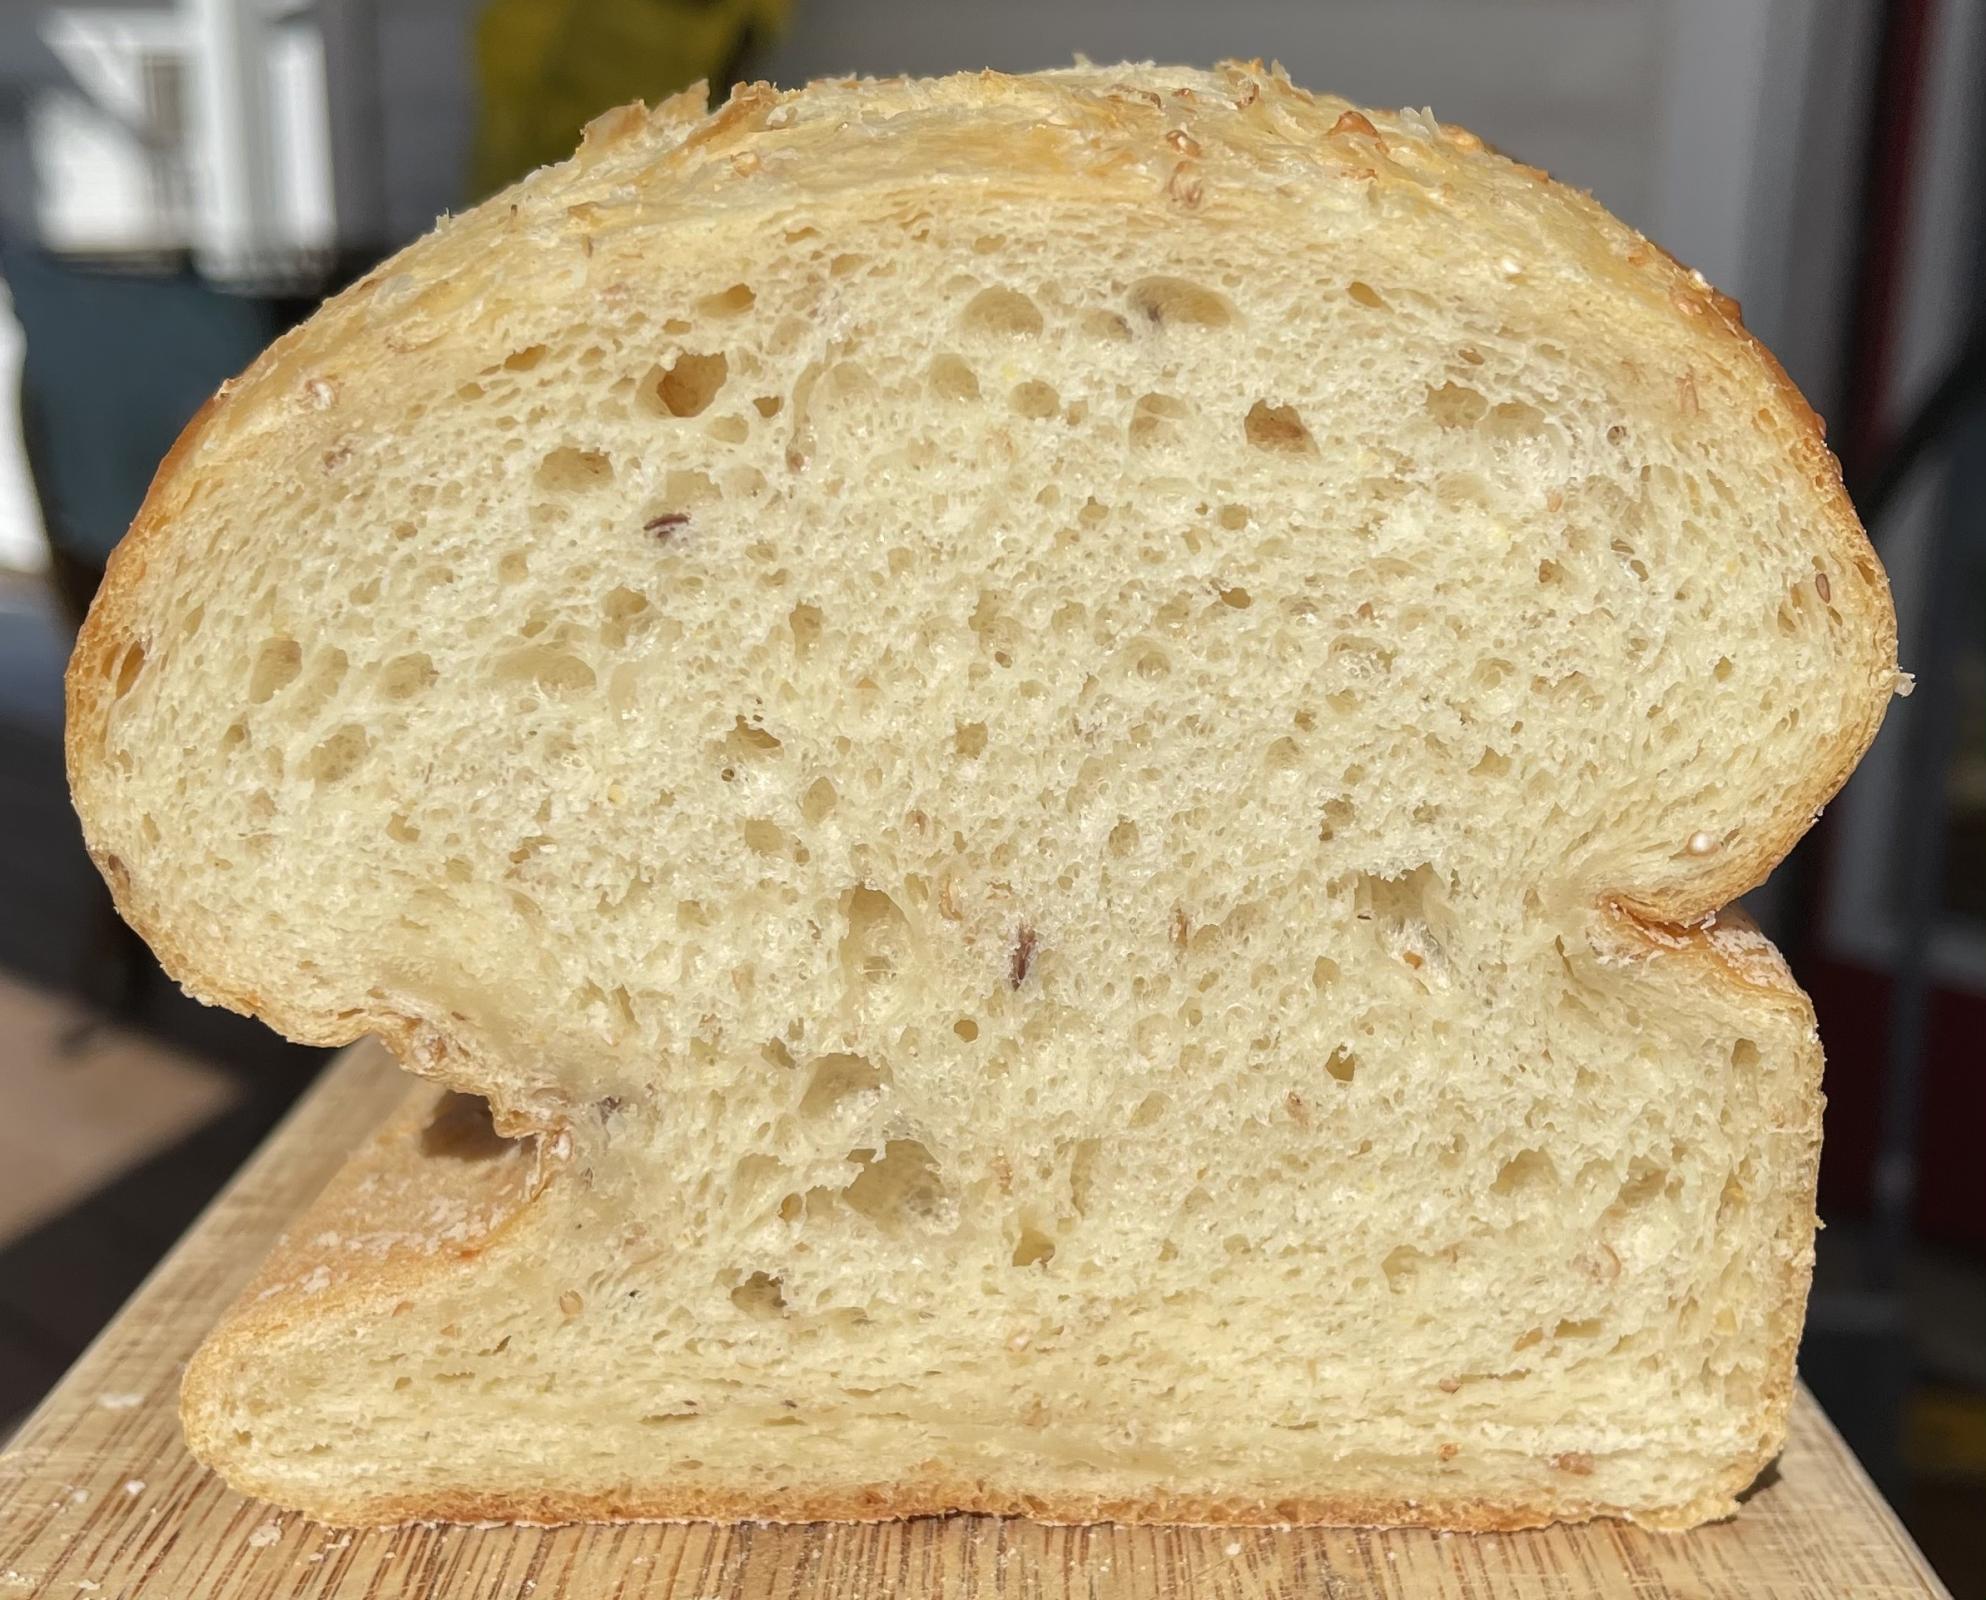 Crumb photo of squashed loaf